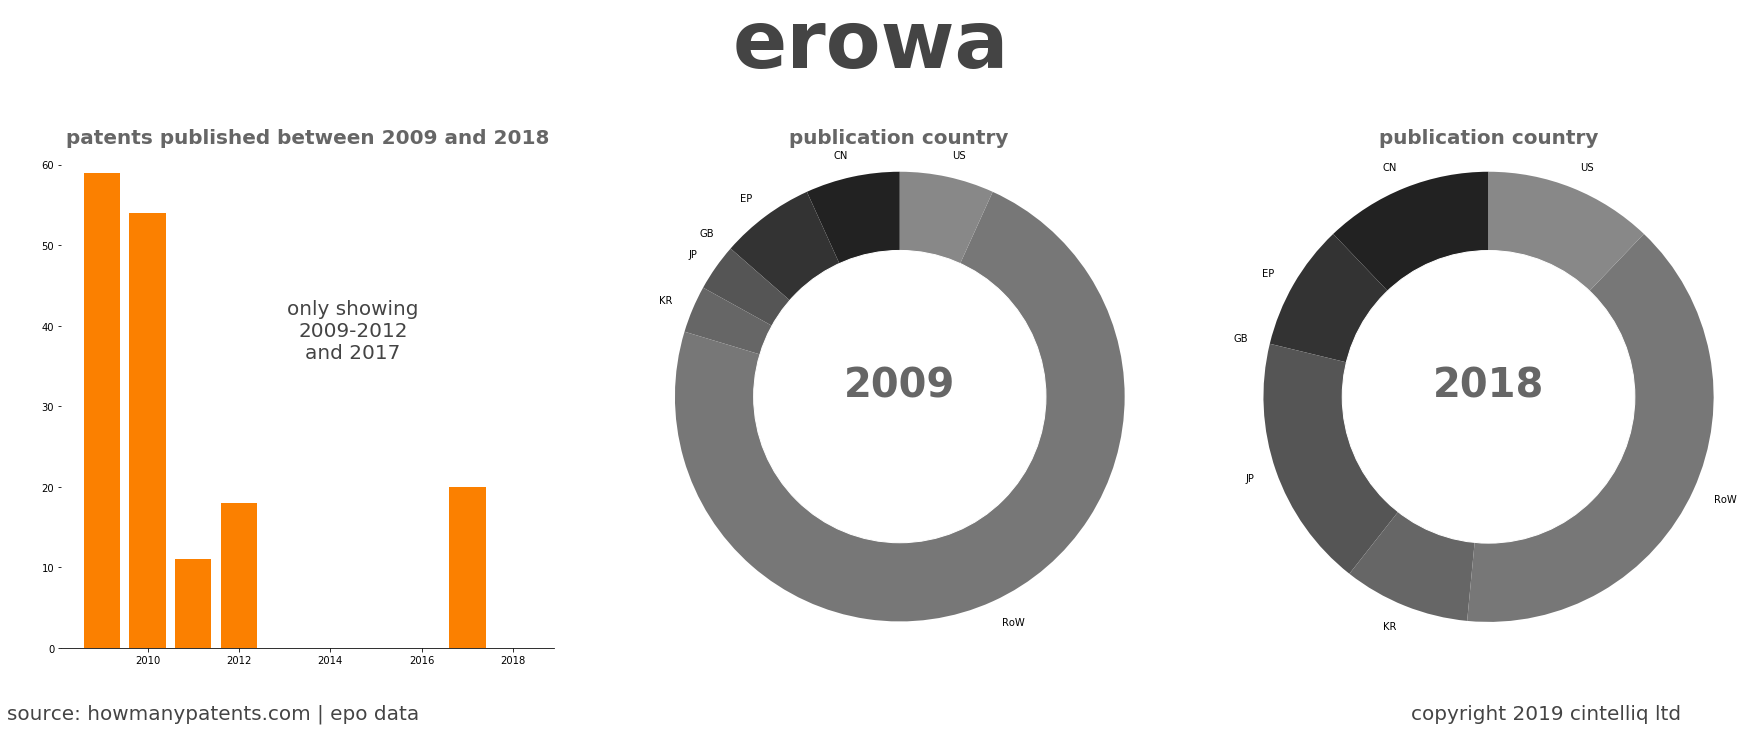 summary of patents for Erowa